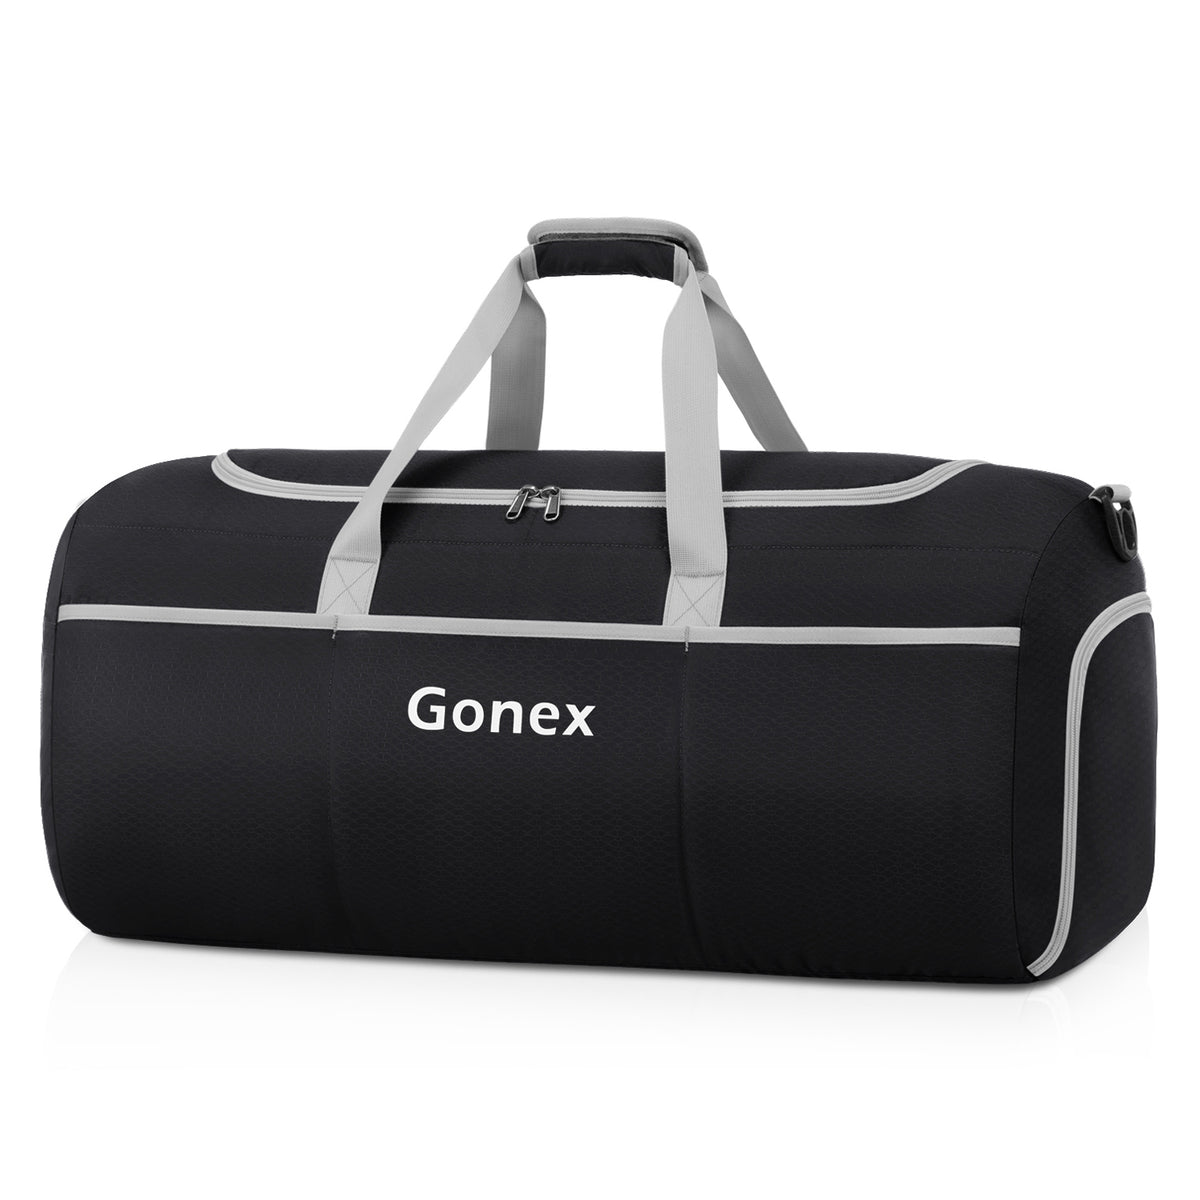 gonex 80l duffel bag